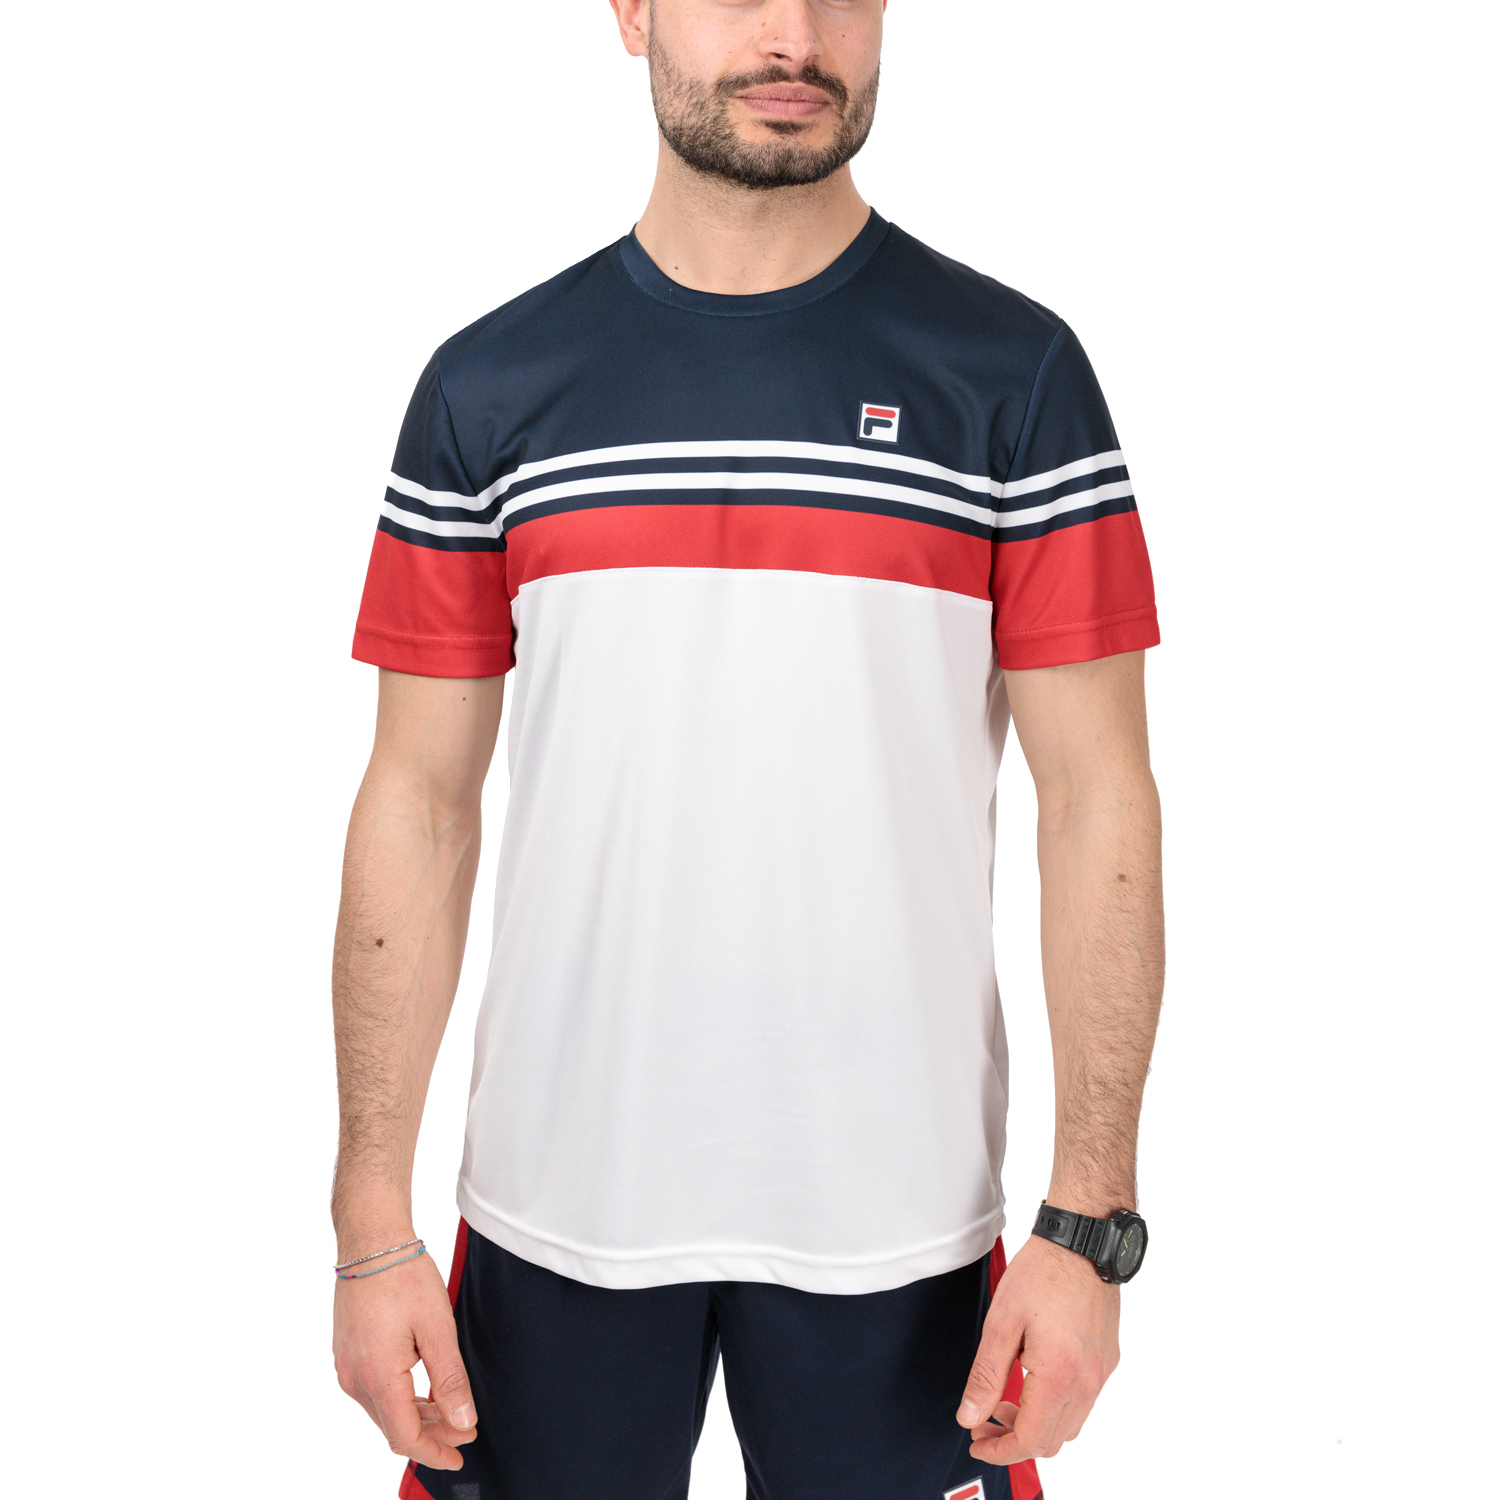 Fila Malte Camiseta - White/Red